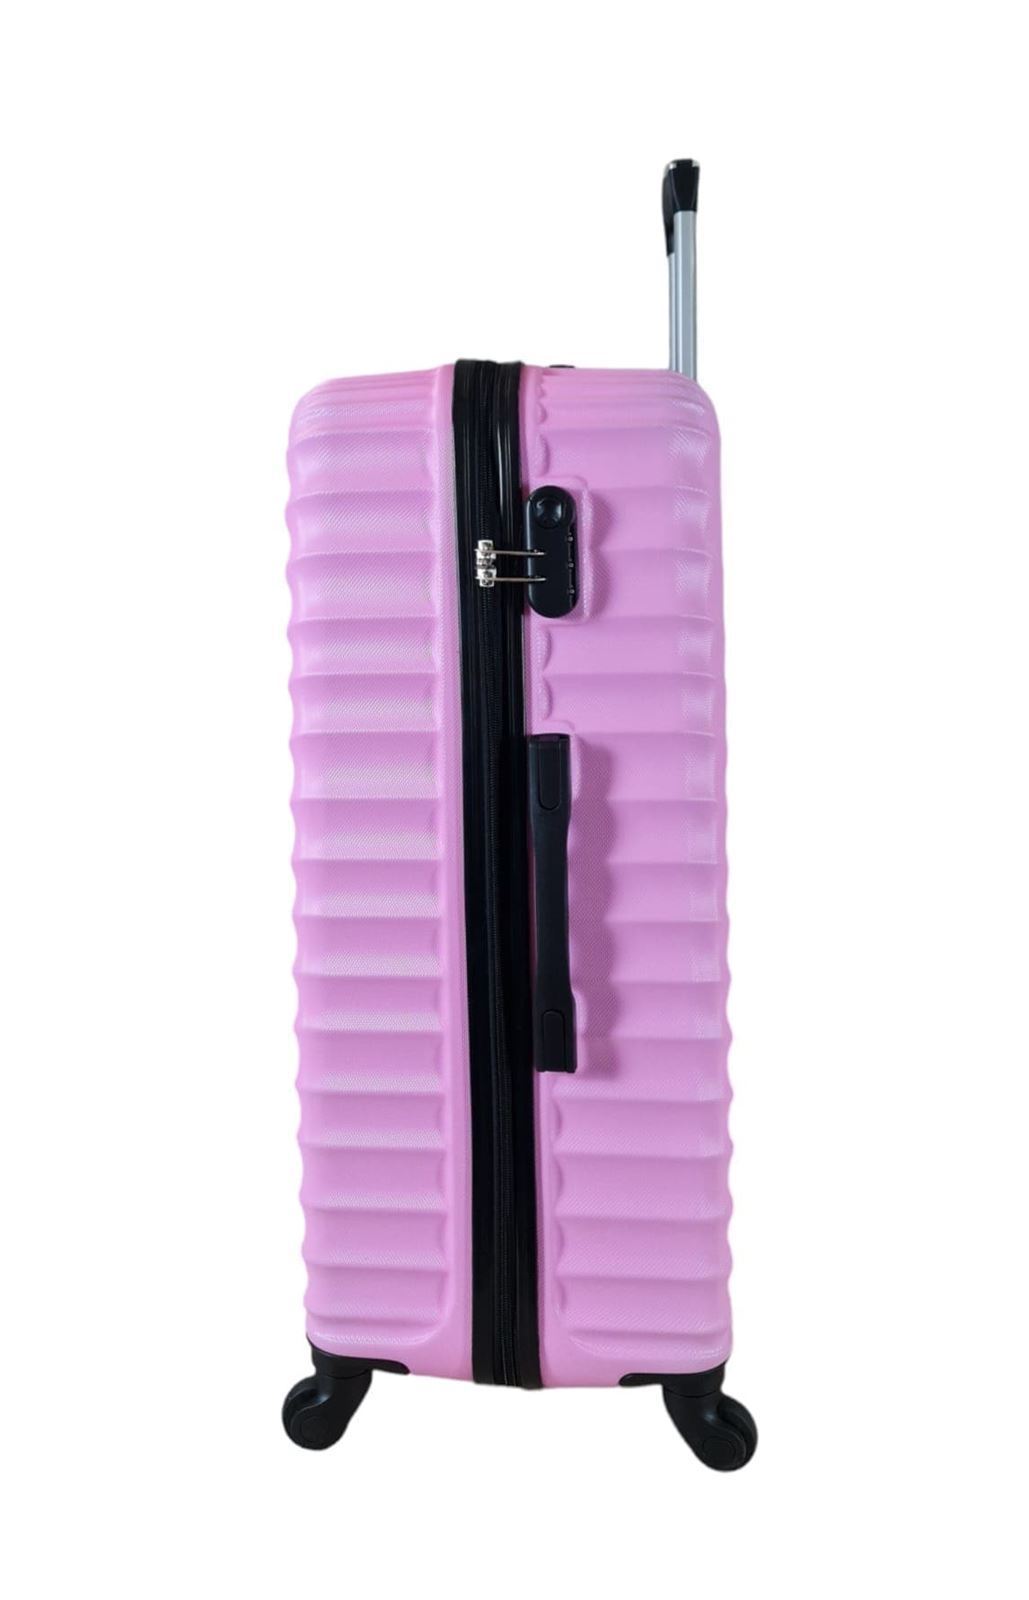 Maleta VIP Grande 75x46x30 cms Muy Ligera Barata Material ABS color Rosa Barbie - Imagen 3